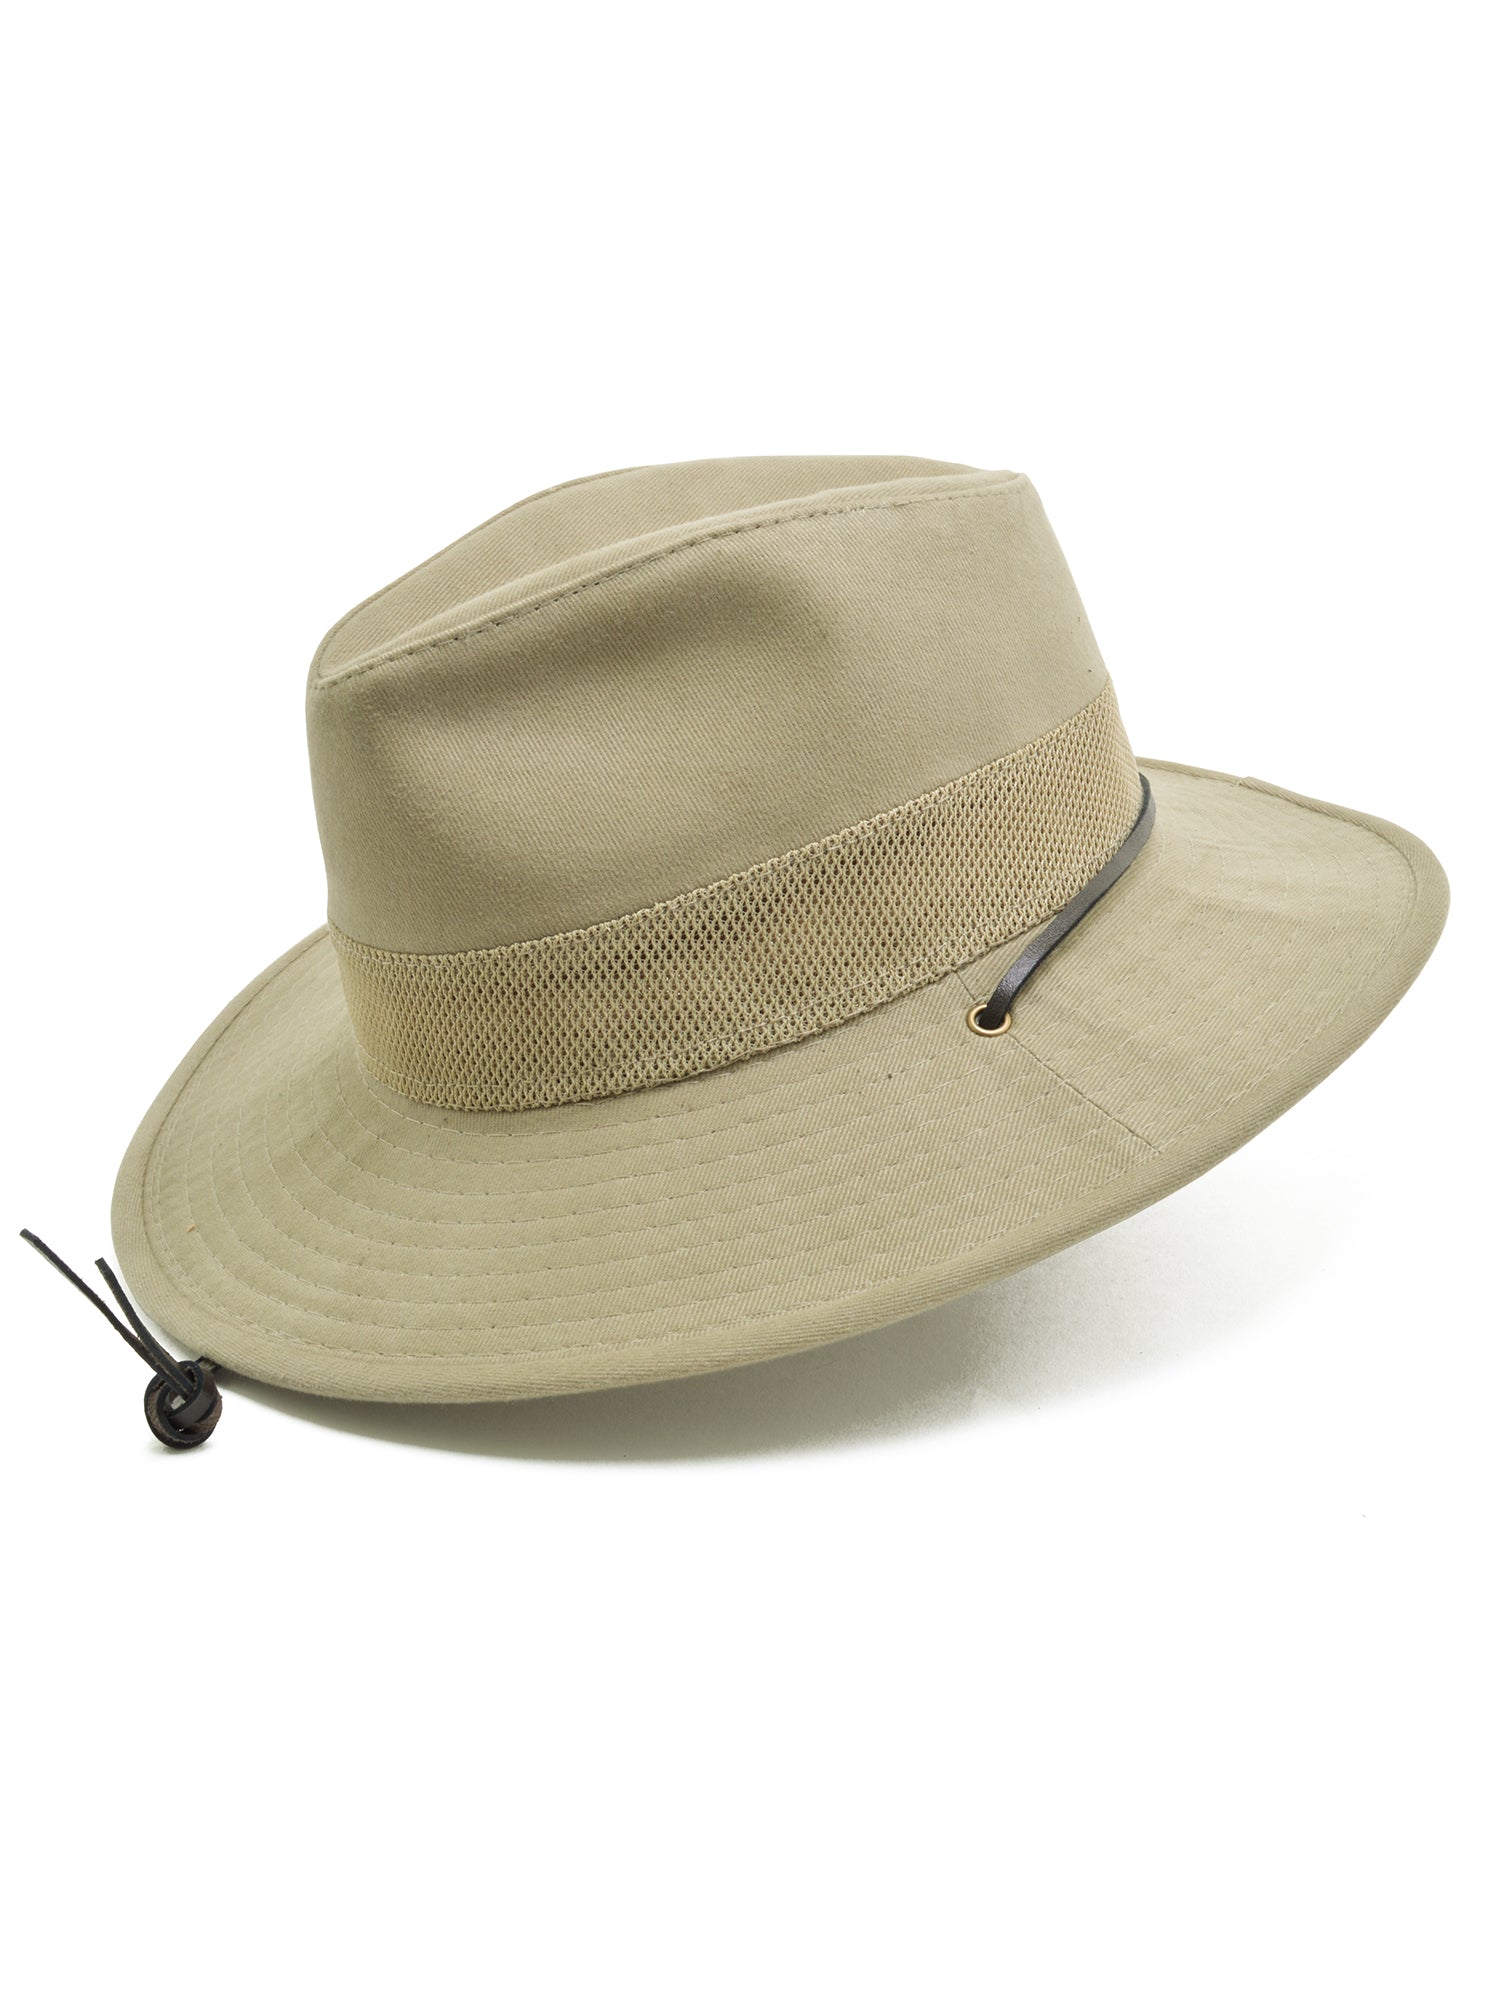 Dobbs 100% Cotton Safari Master Hat in Olive